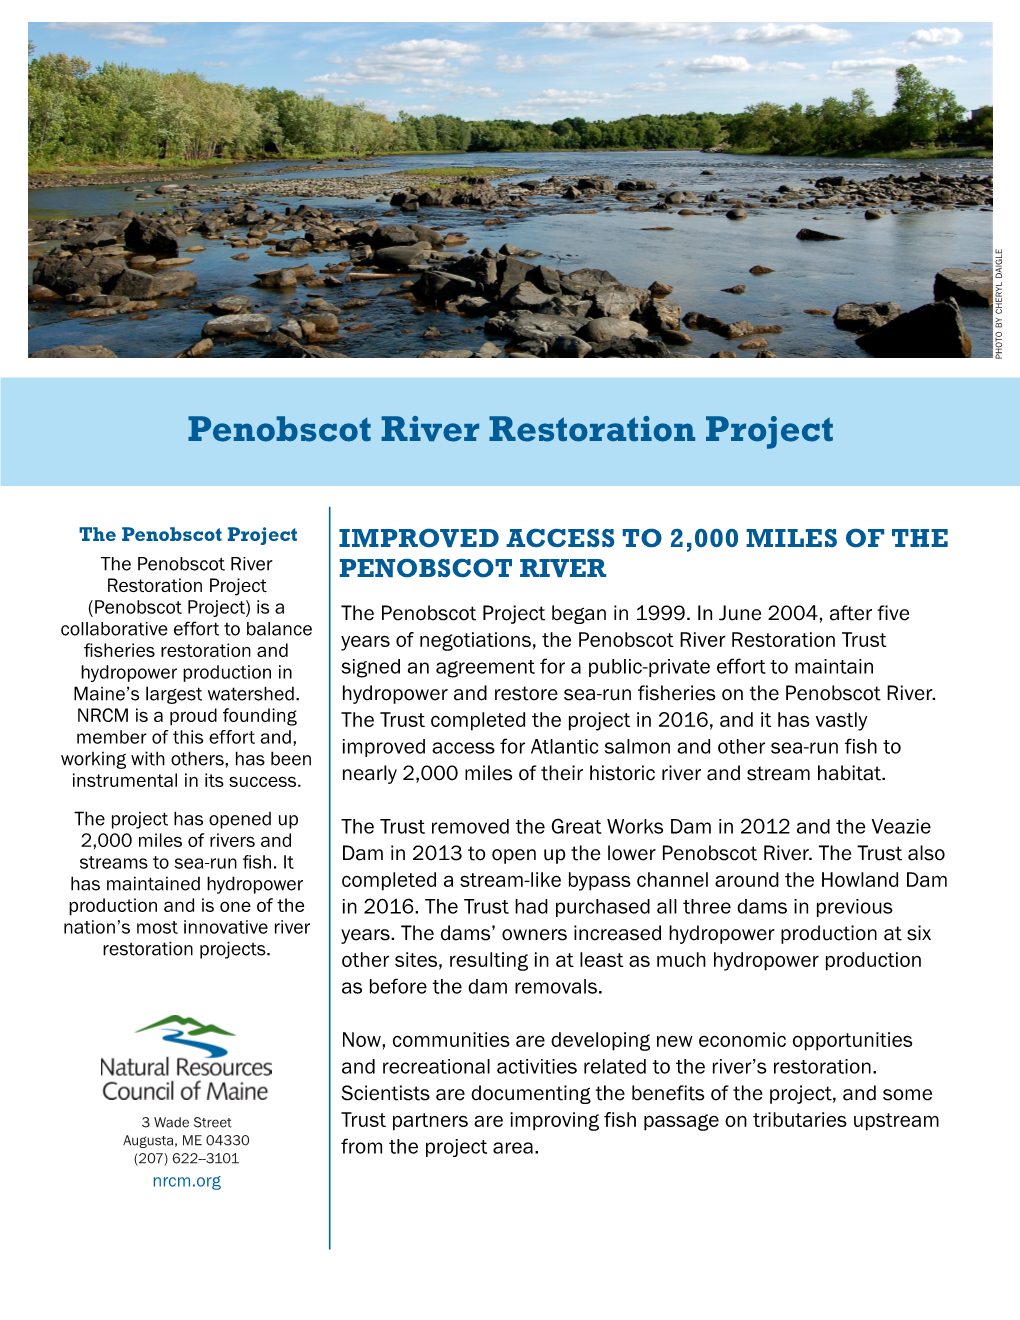 Penobscot River Restoration Projects